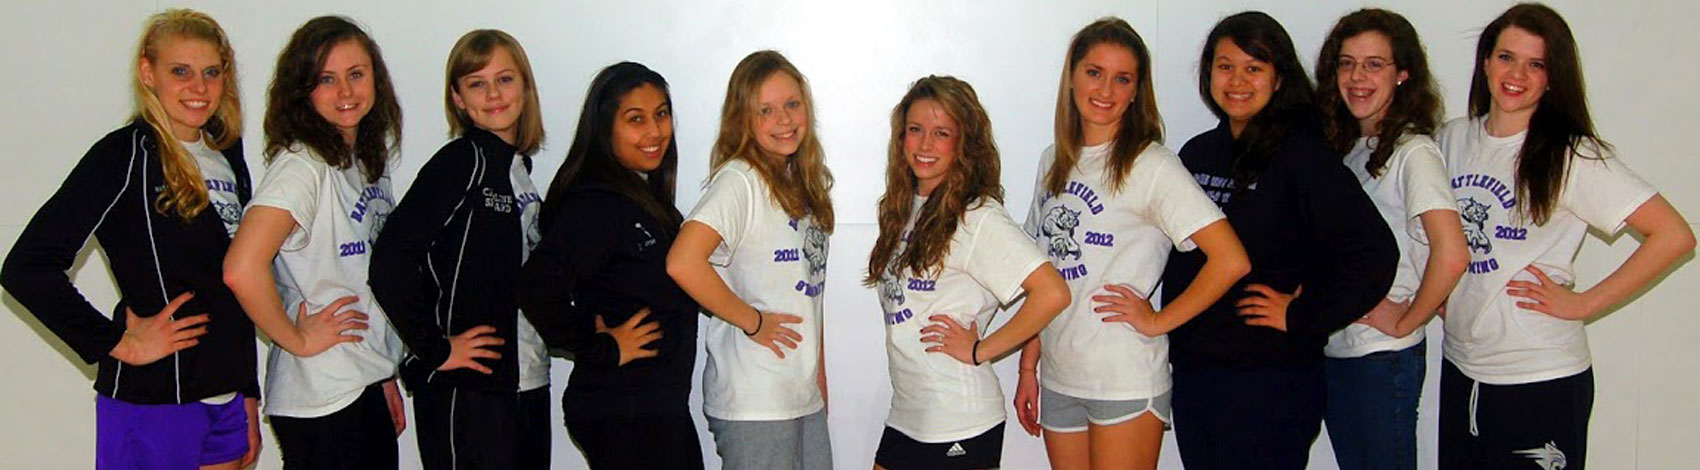 BHS Senior Girls - 2012